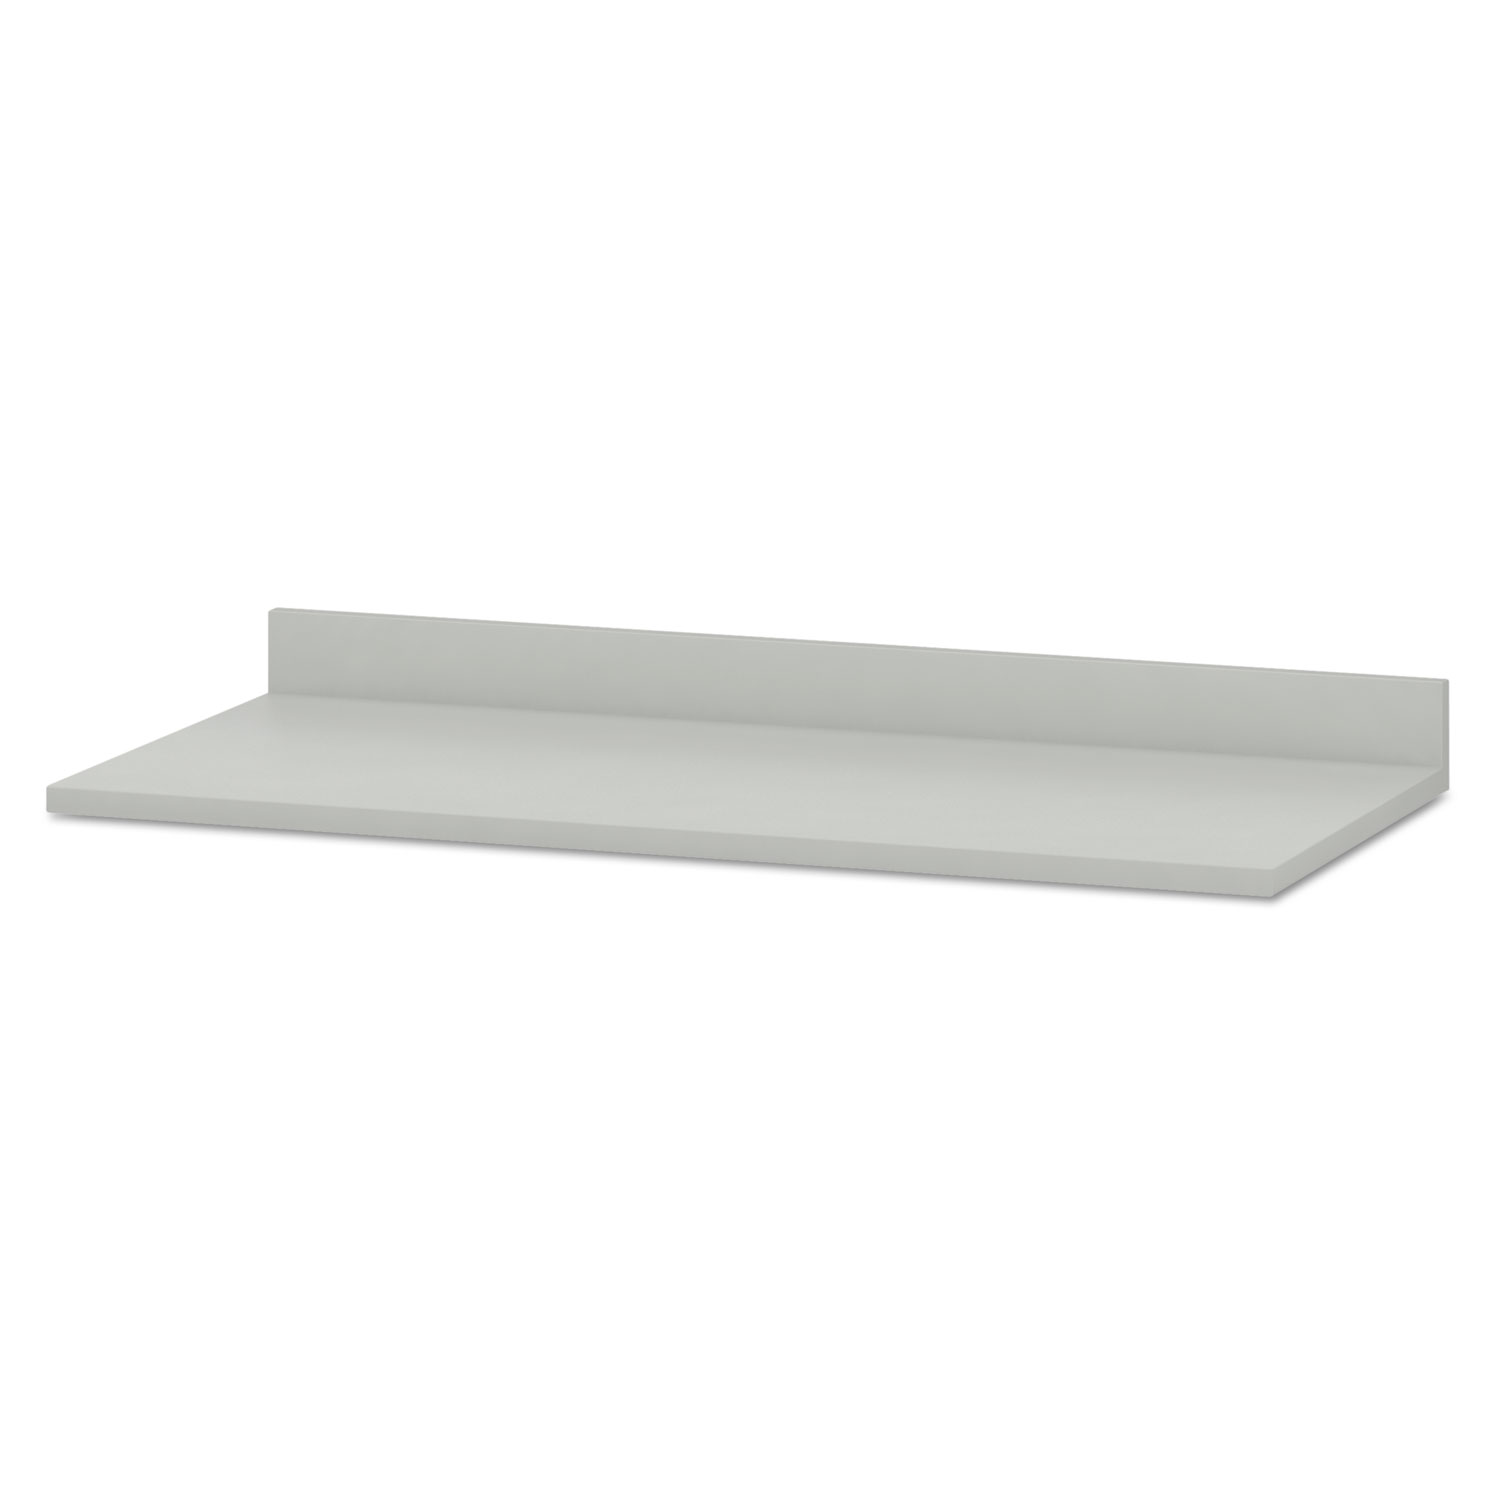 Hospitality Cabinet Modular Countertop, 54w x 25d x 4-3/4h, Light Gray